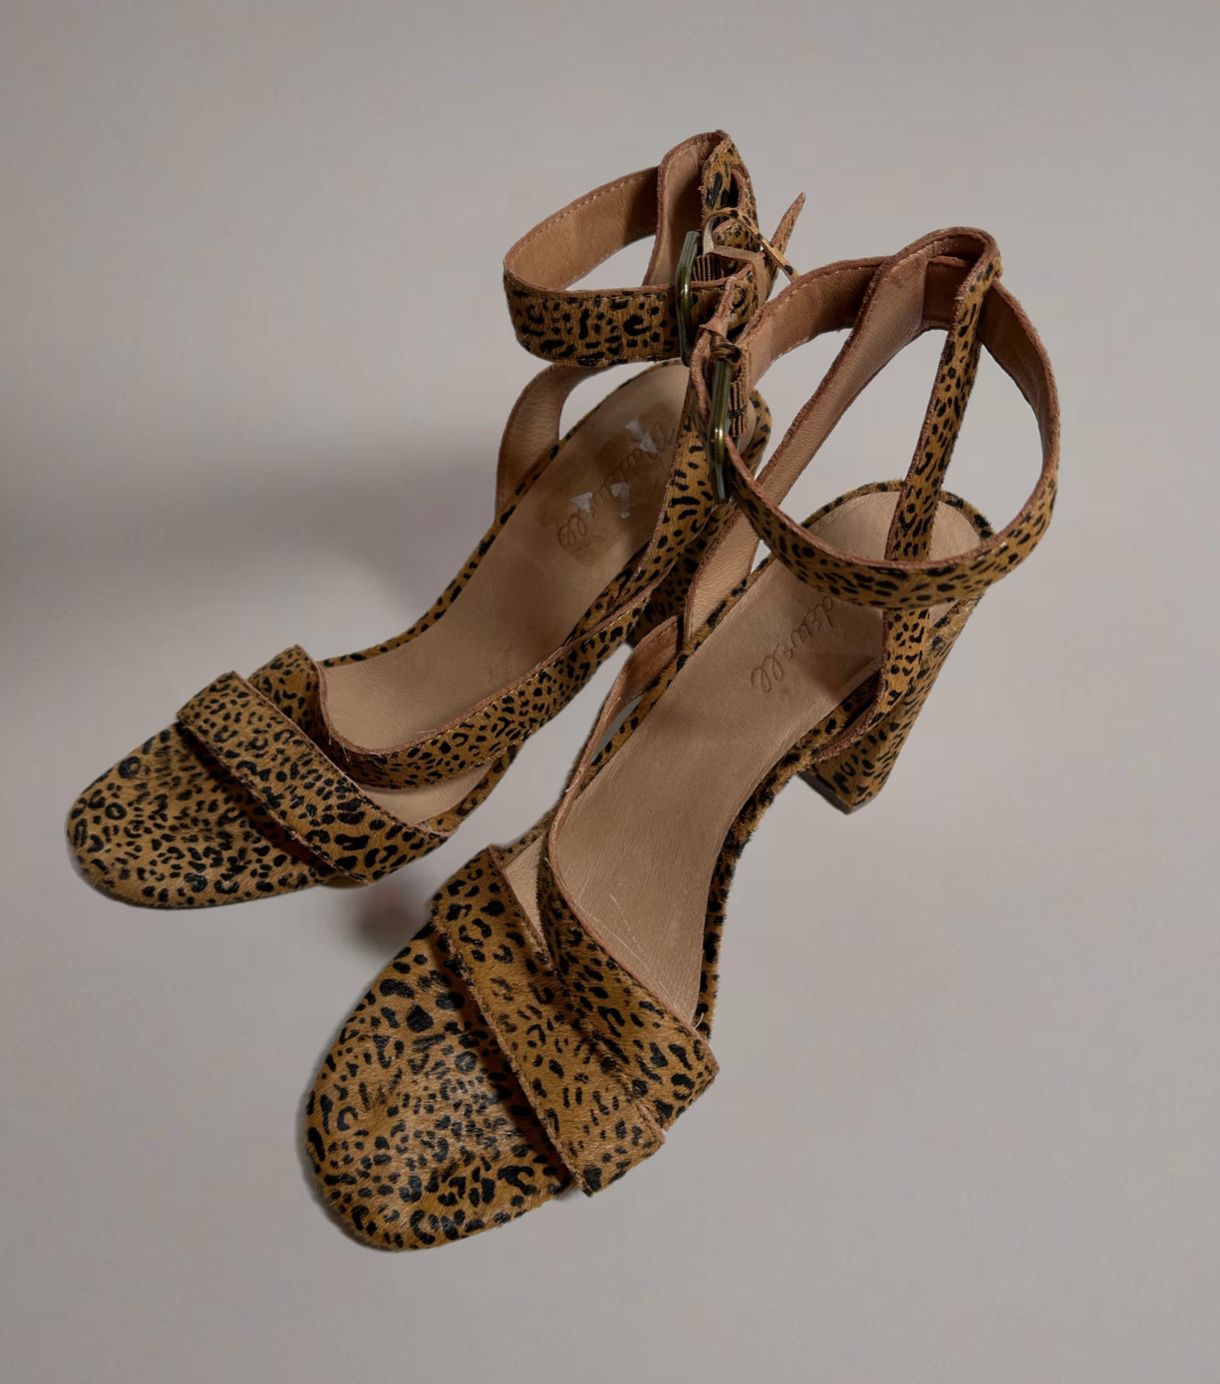 MADEWELL Alyssa Heeled Sandals Calf Fur Leather Womens Size 10 AE246